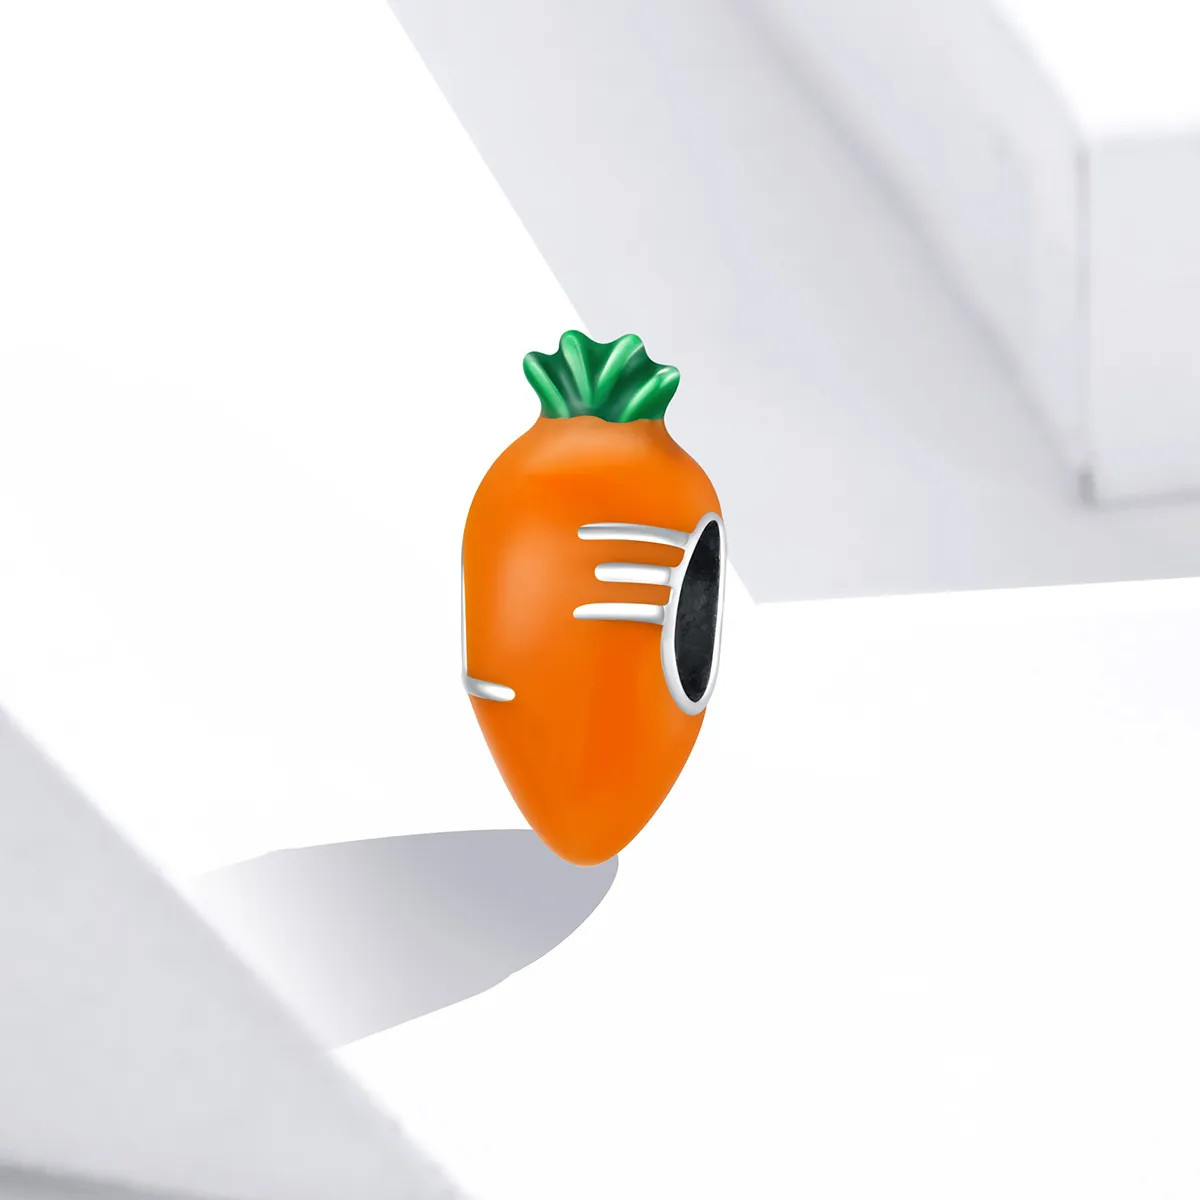 Pandora Style Silver Cute Carrot Charm - SCC1591